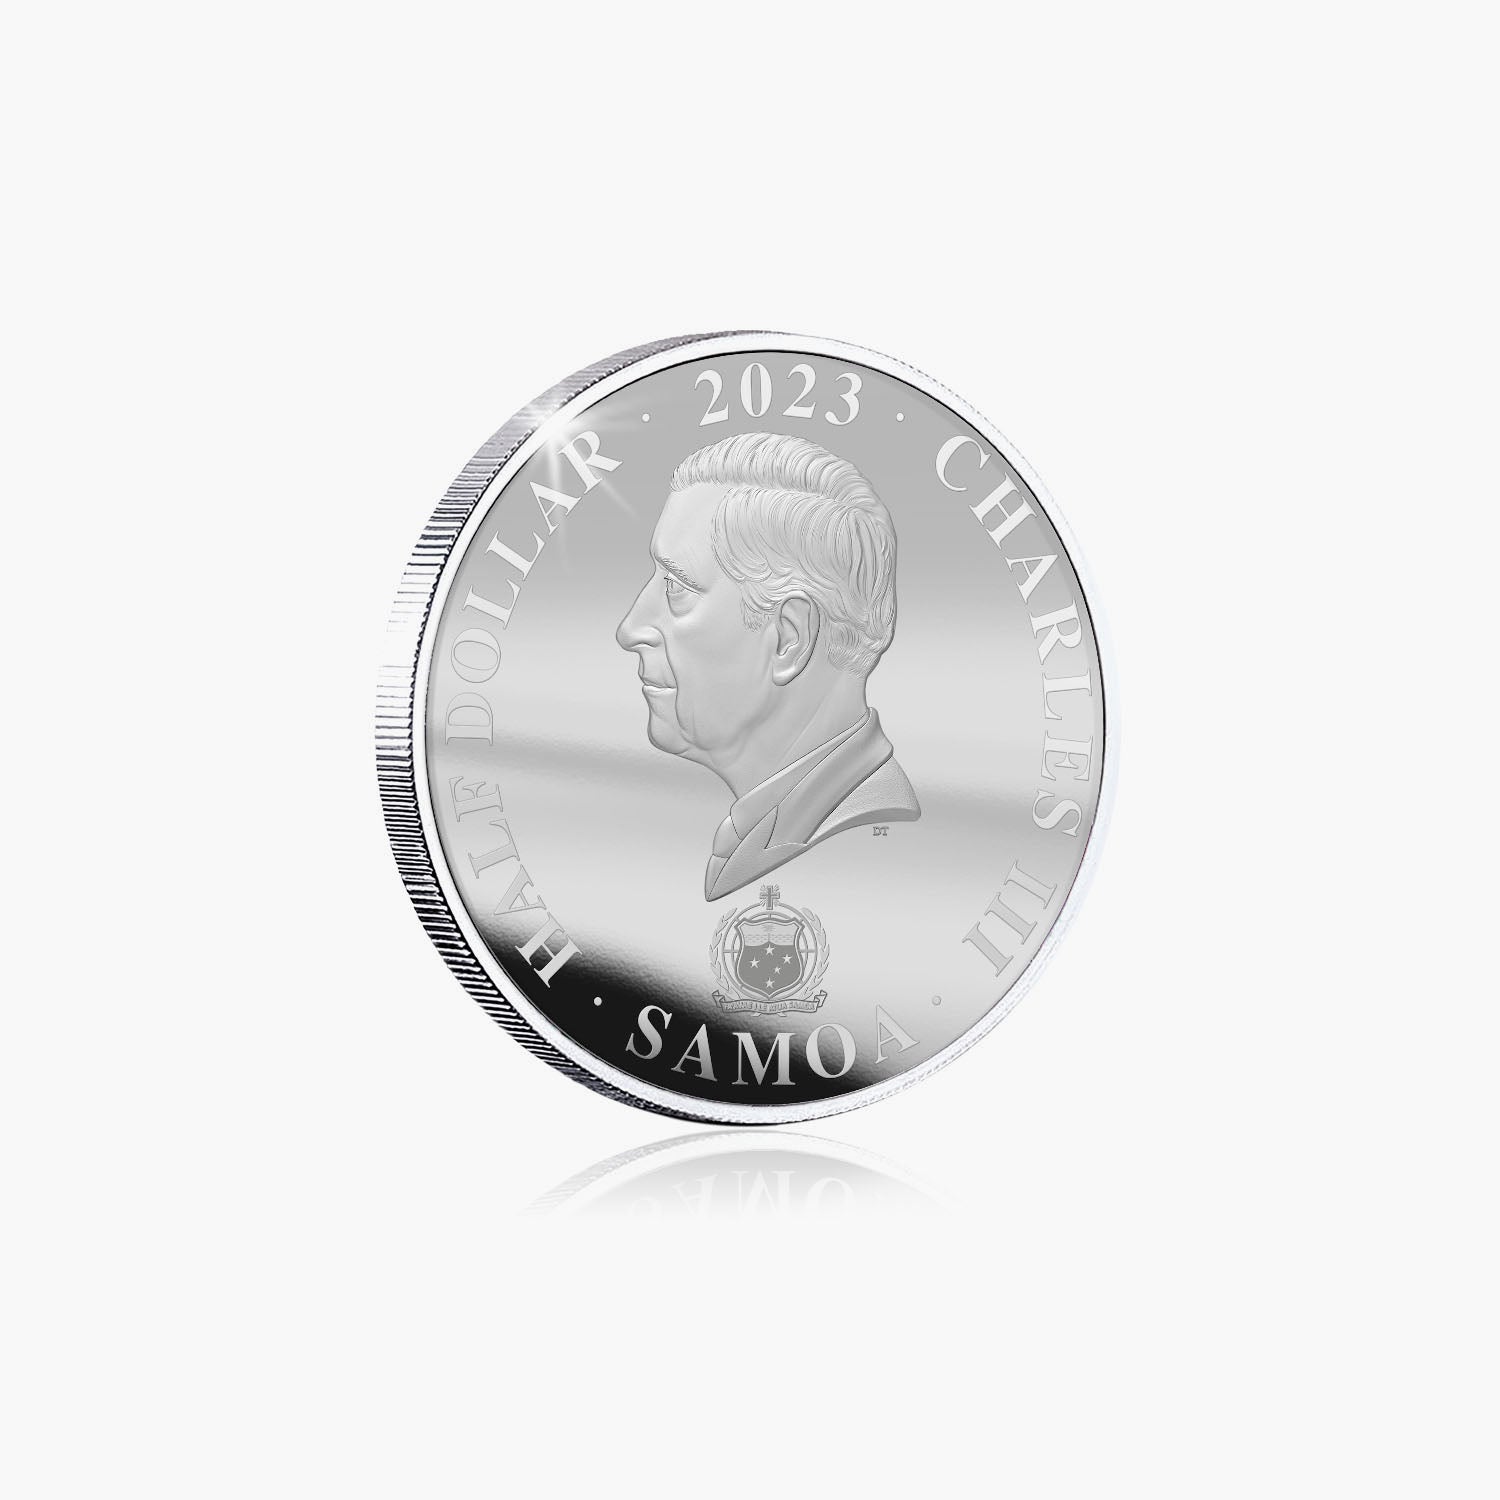 NASA 2023 Friendship 50mm Silver-plated Coin